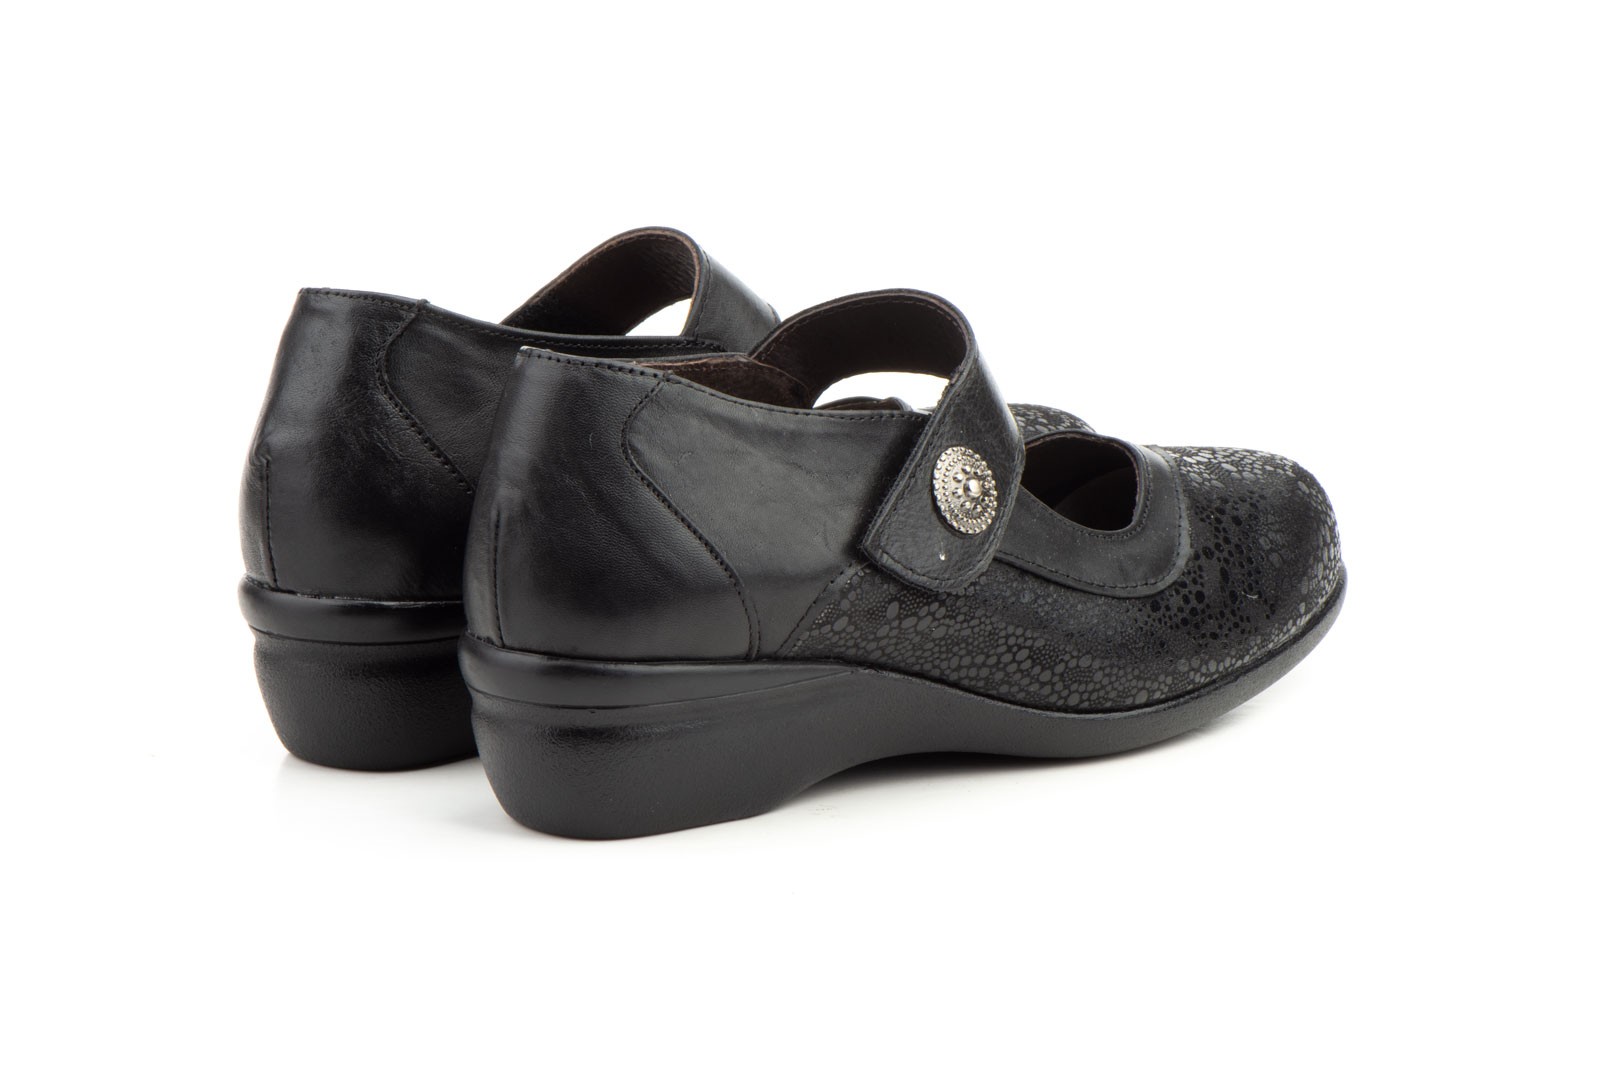 Zapatos Mujer Ancho Especial Licra Piel Negro Velcro